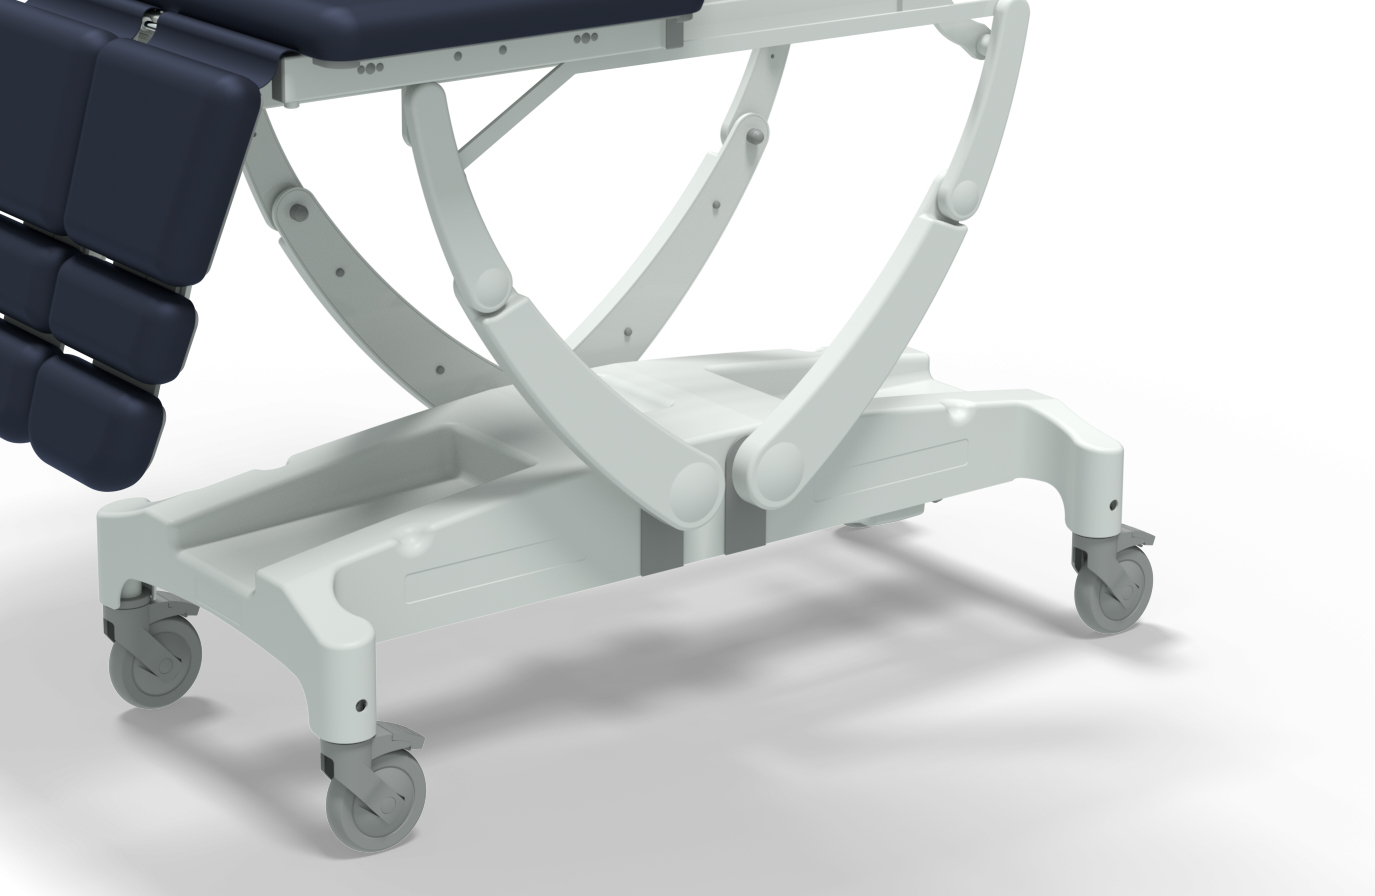 roulettes frein individuel châssis premium fauteuil pedicurie electrique seers medical tablelya NV0495-PRM